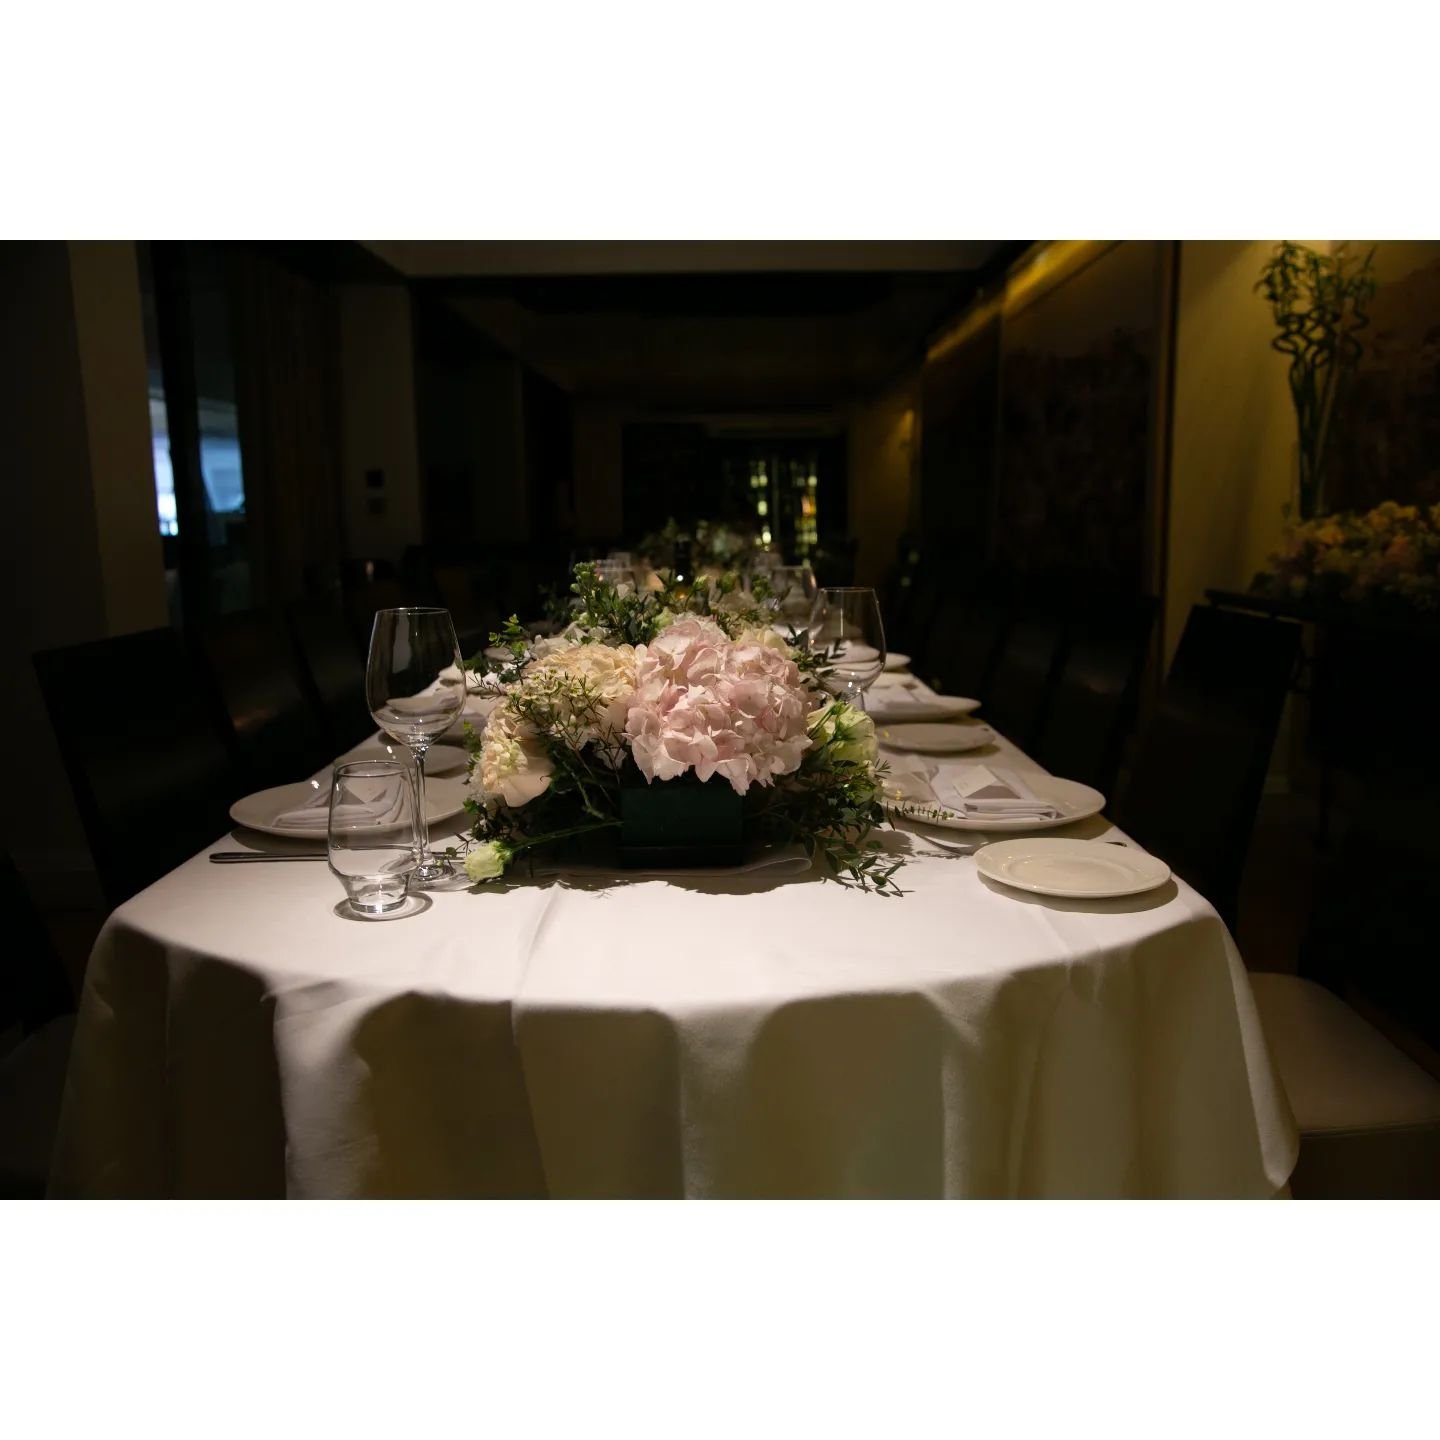 Gorgeous table decor for beautiful Şirin &amp; Daniel on they wedding day at the amazing @estiatoriomiloslondon ❤️

&copy; @candidtheoryuk